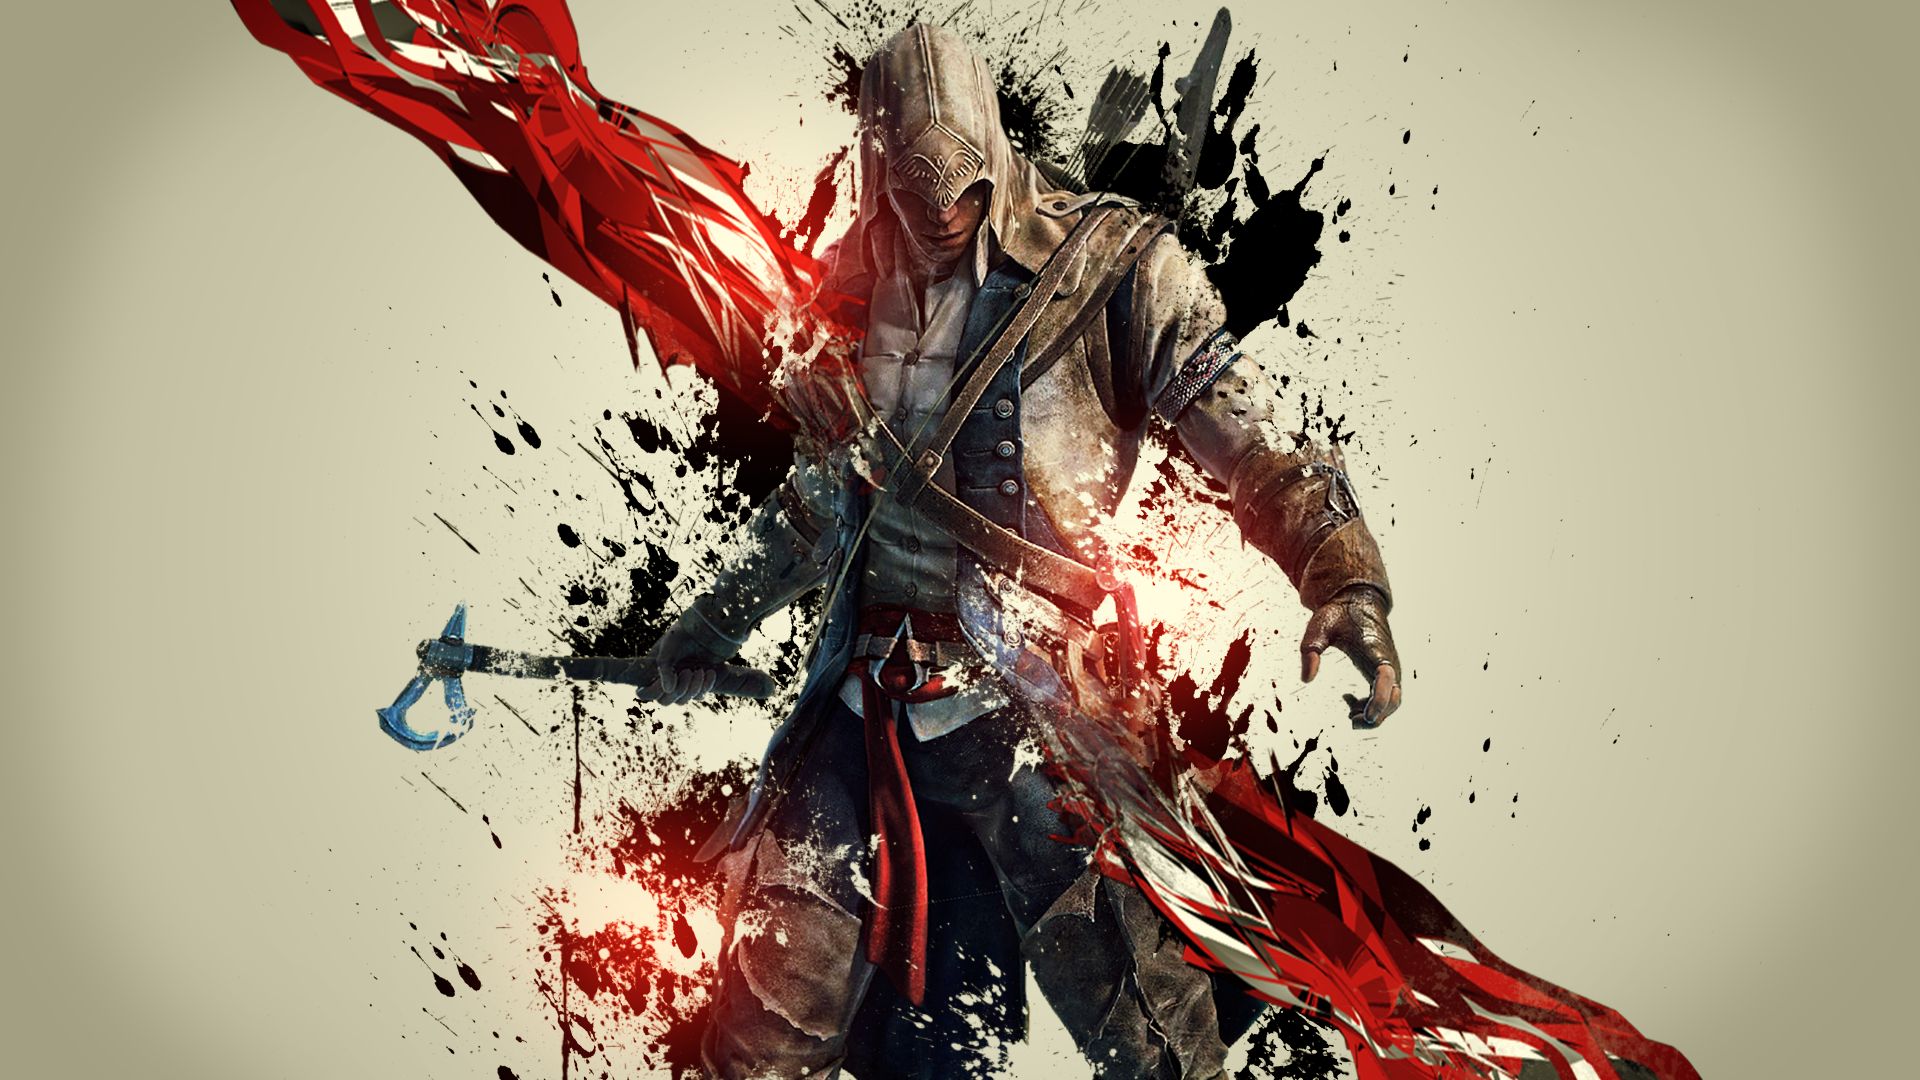 Assassins Creed of Battlefield 1 4K Hd Wallpaper for Desktop and Mobiles -  Wallpapers.net